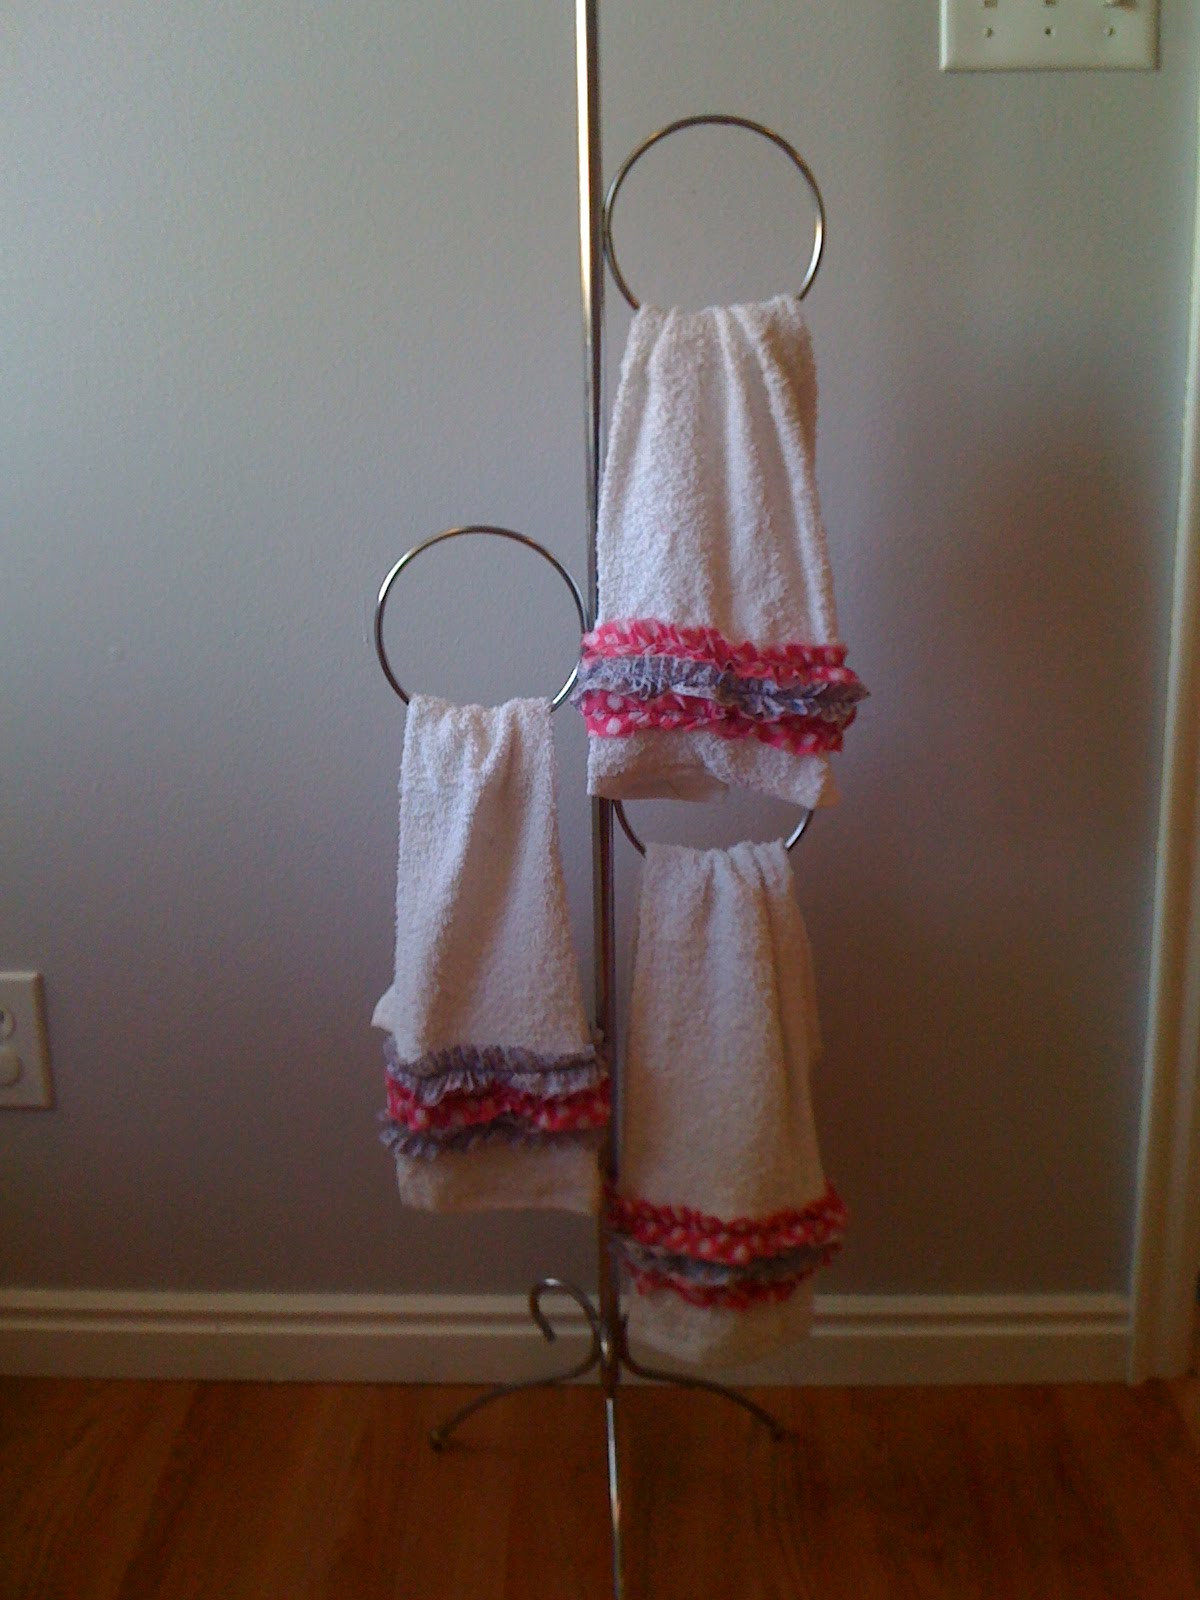 Bathroom Towel Designs
 Inkin cute Ideas Craft bathroom towels